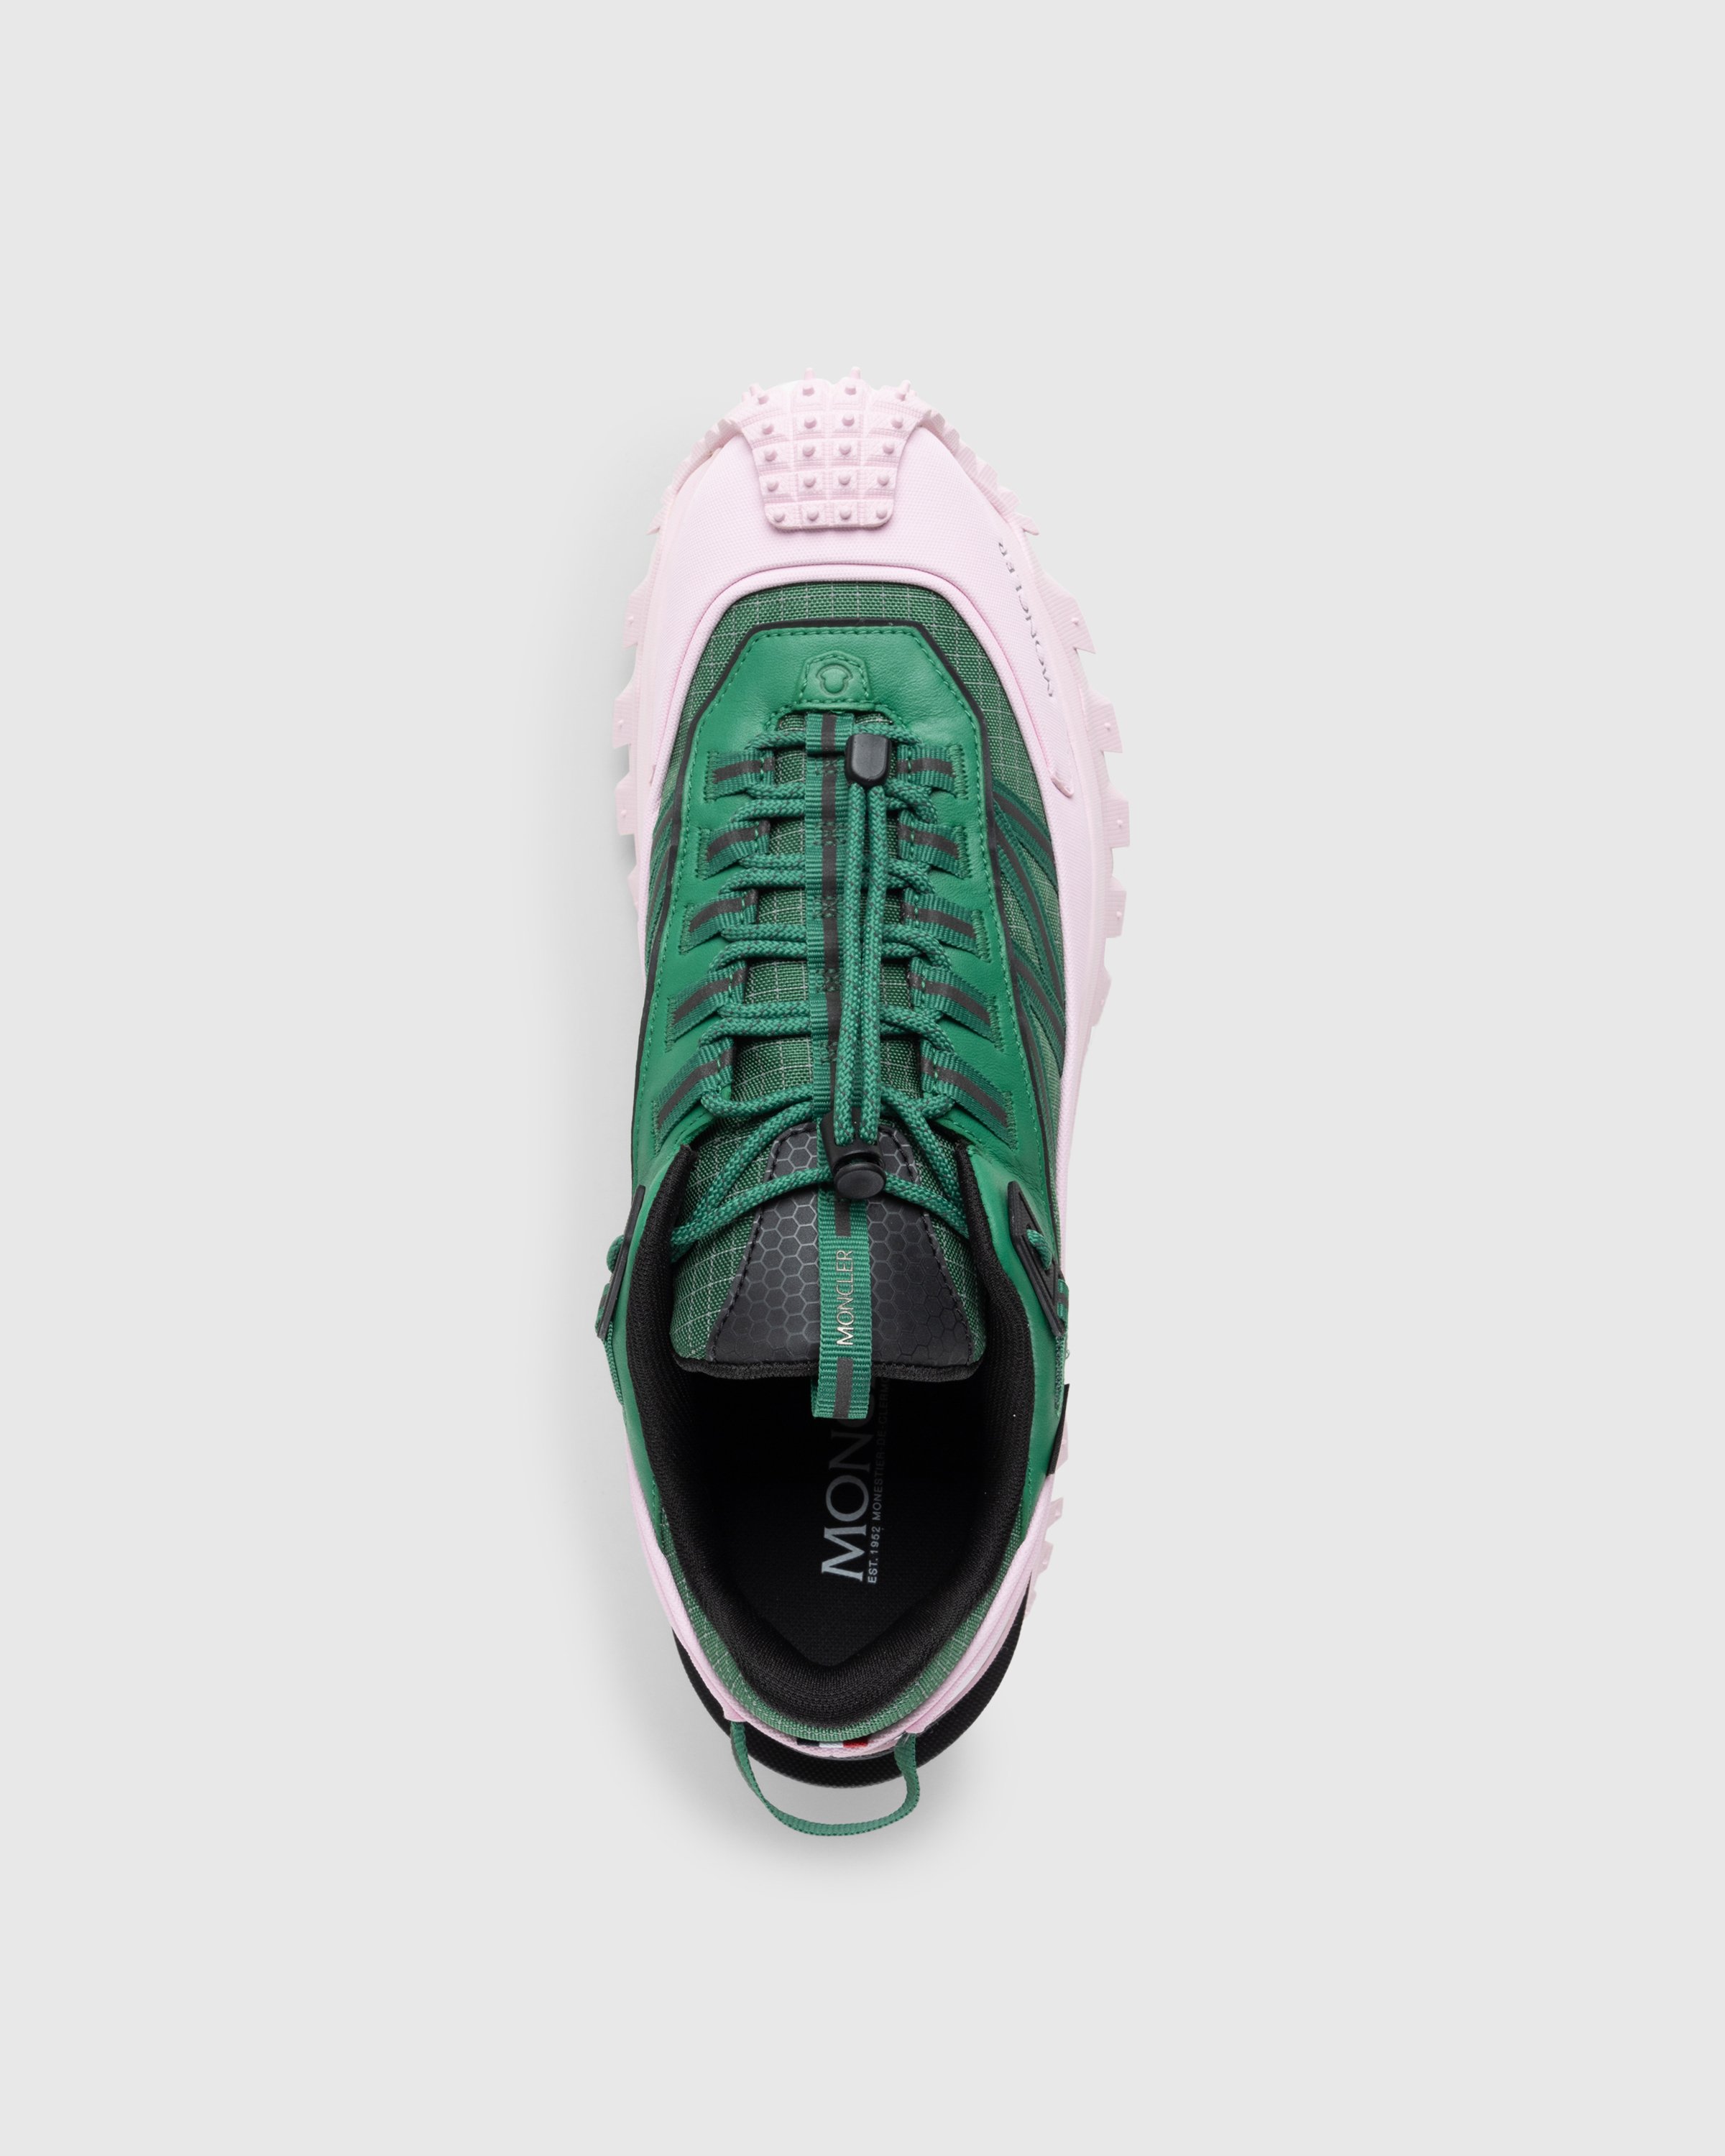 Moncler - Trailgrip GTX Low-Top Sneakers Green/Pink - Footwear - Pink - Image 5